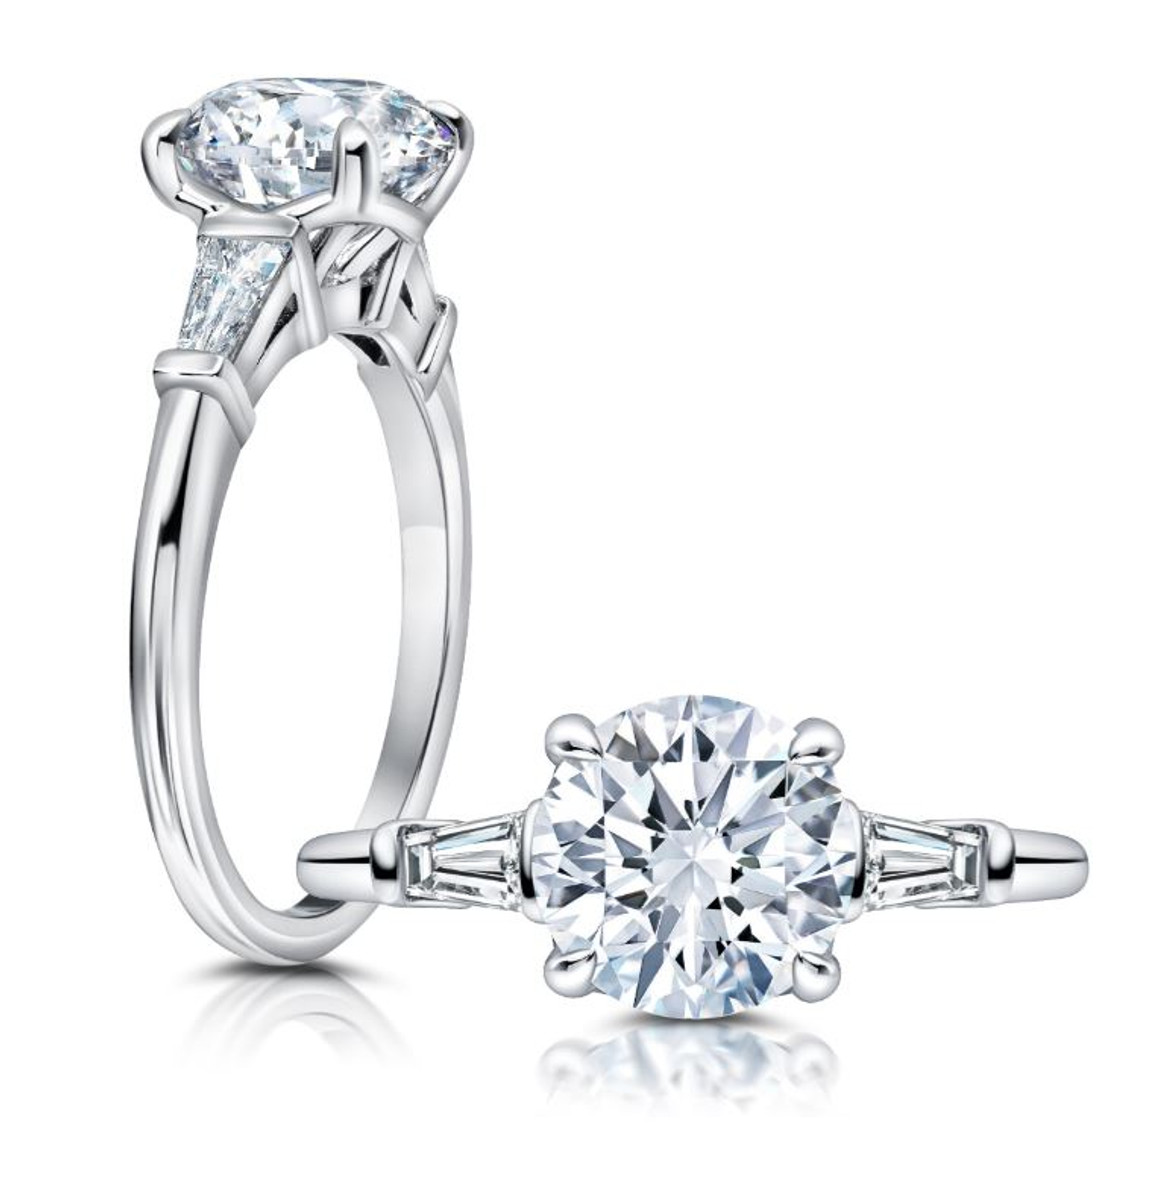 Peter Storm 14K White Gold Diamond Semi-Mount Engagement Ring-44250 Product Image